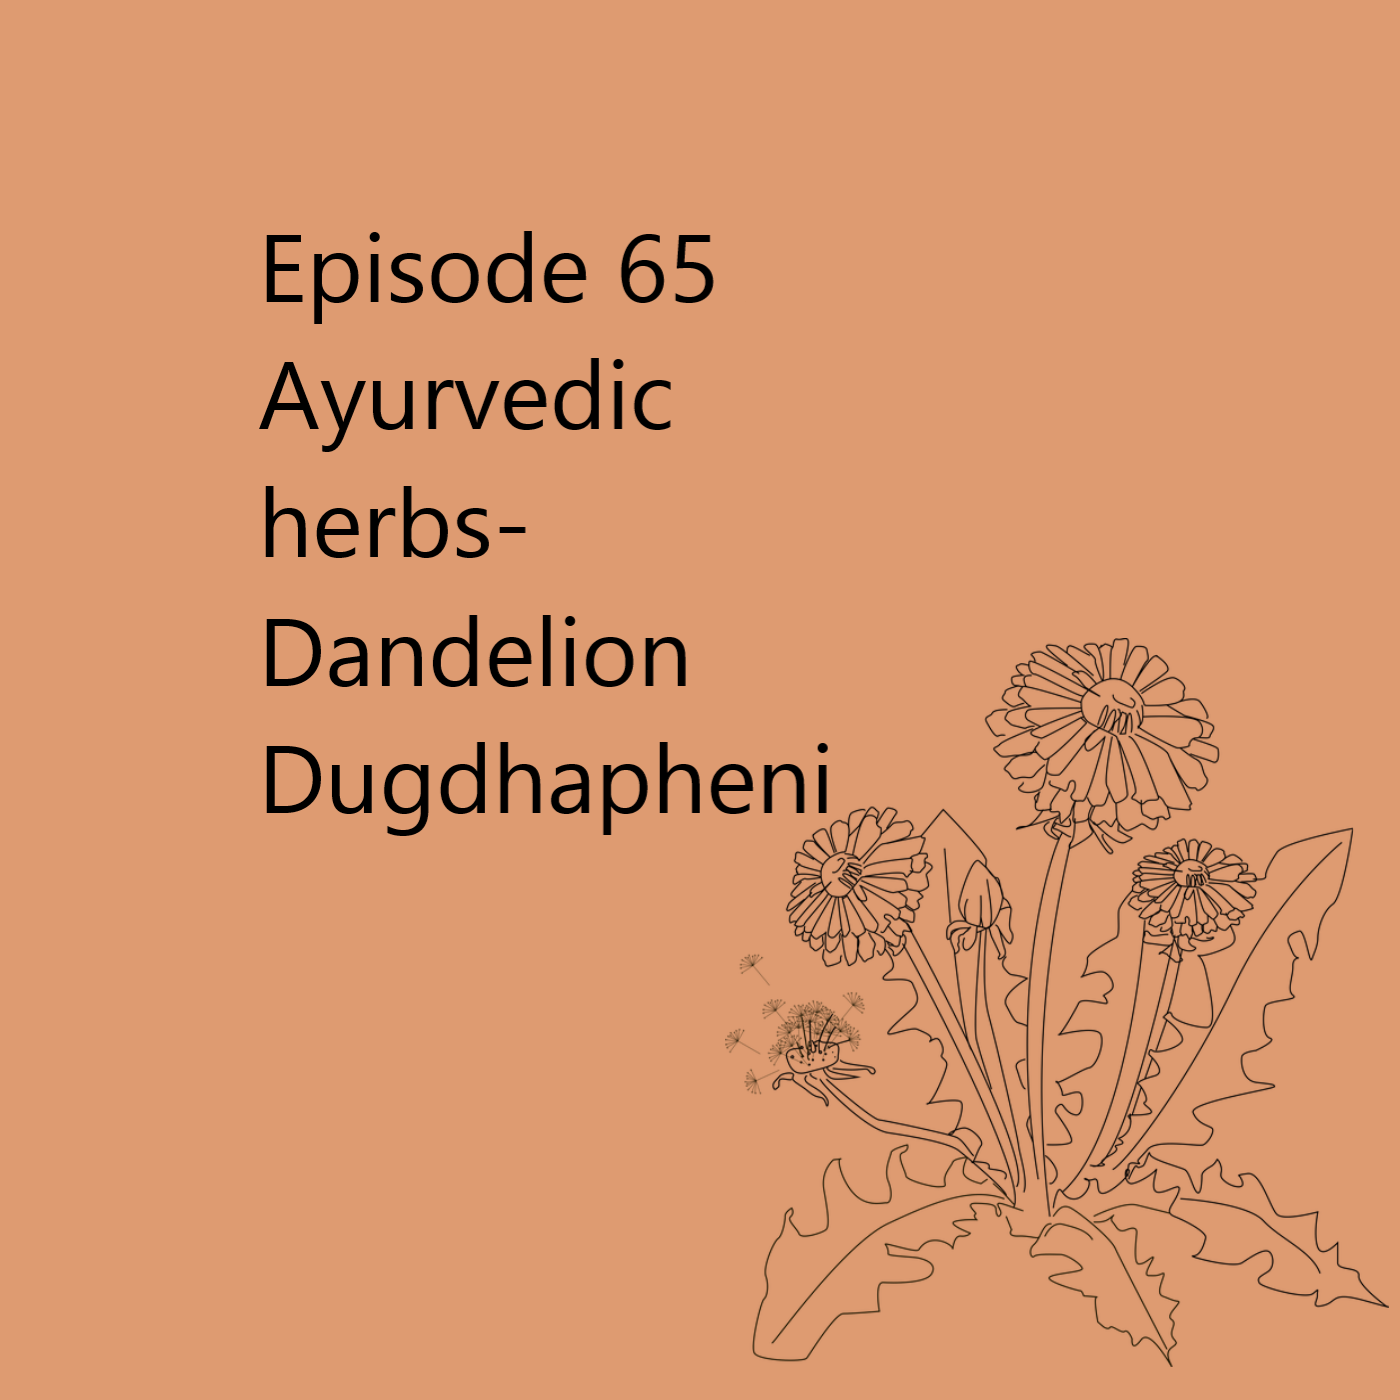 Episode 65 Dandelion